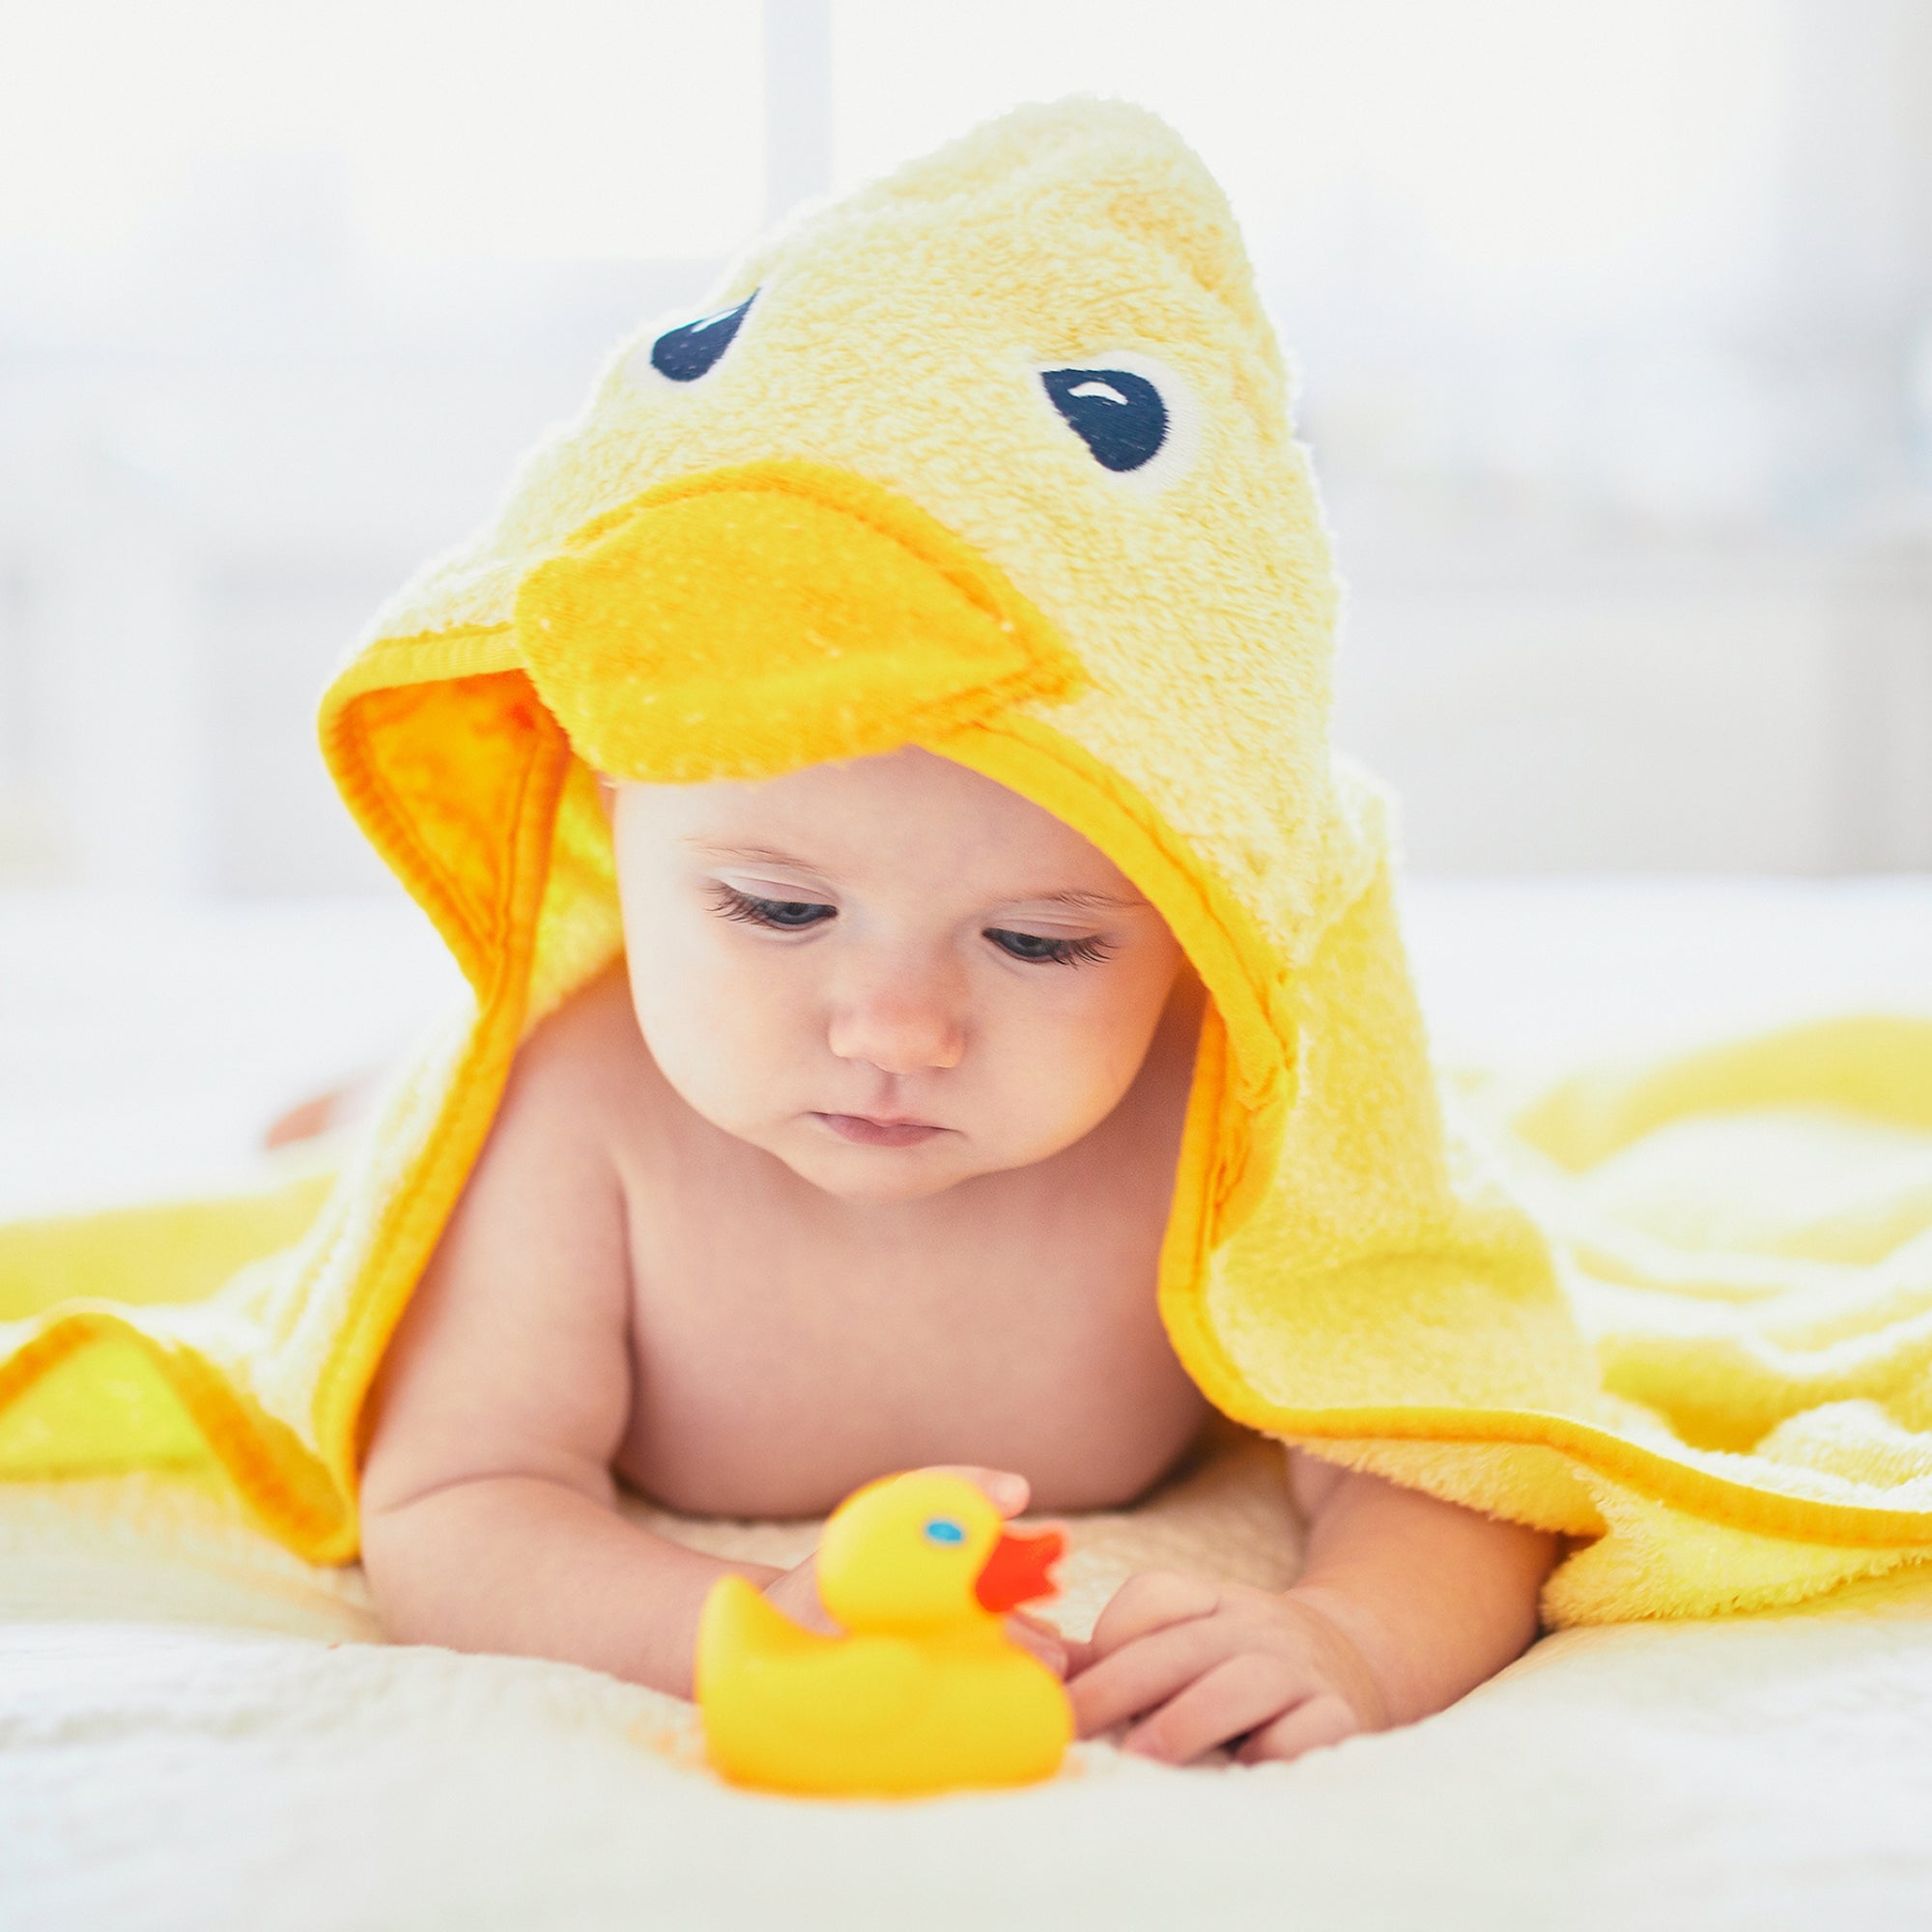 Baby Towels & Bathtime